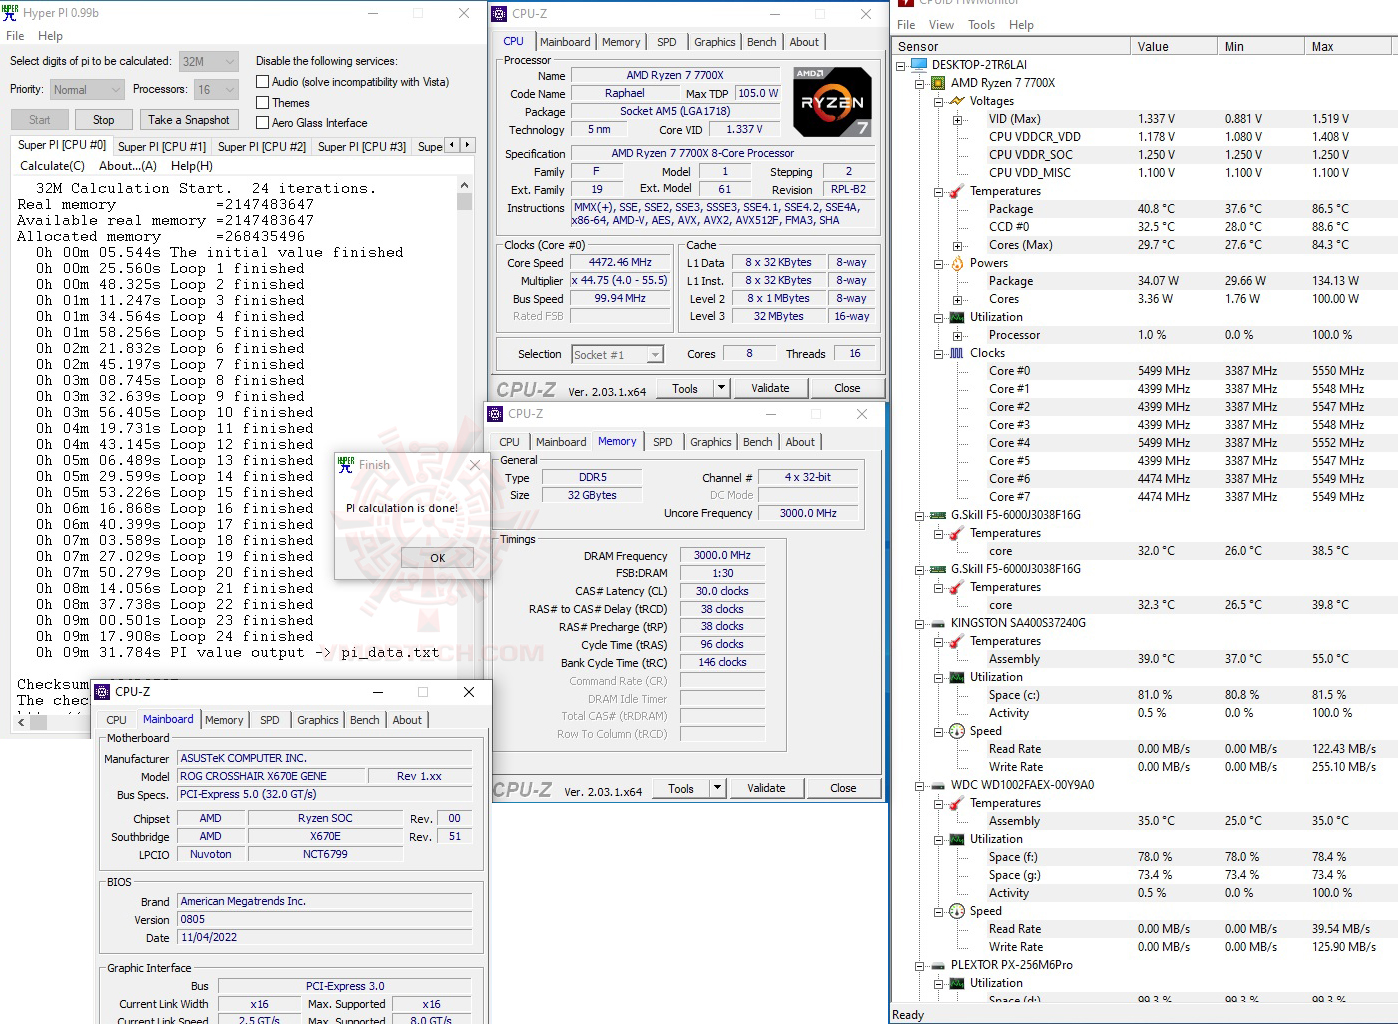 h32 1 AMD RYZEN 7 7700X PROCESSOR REVIEW